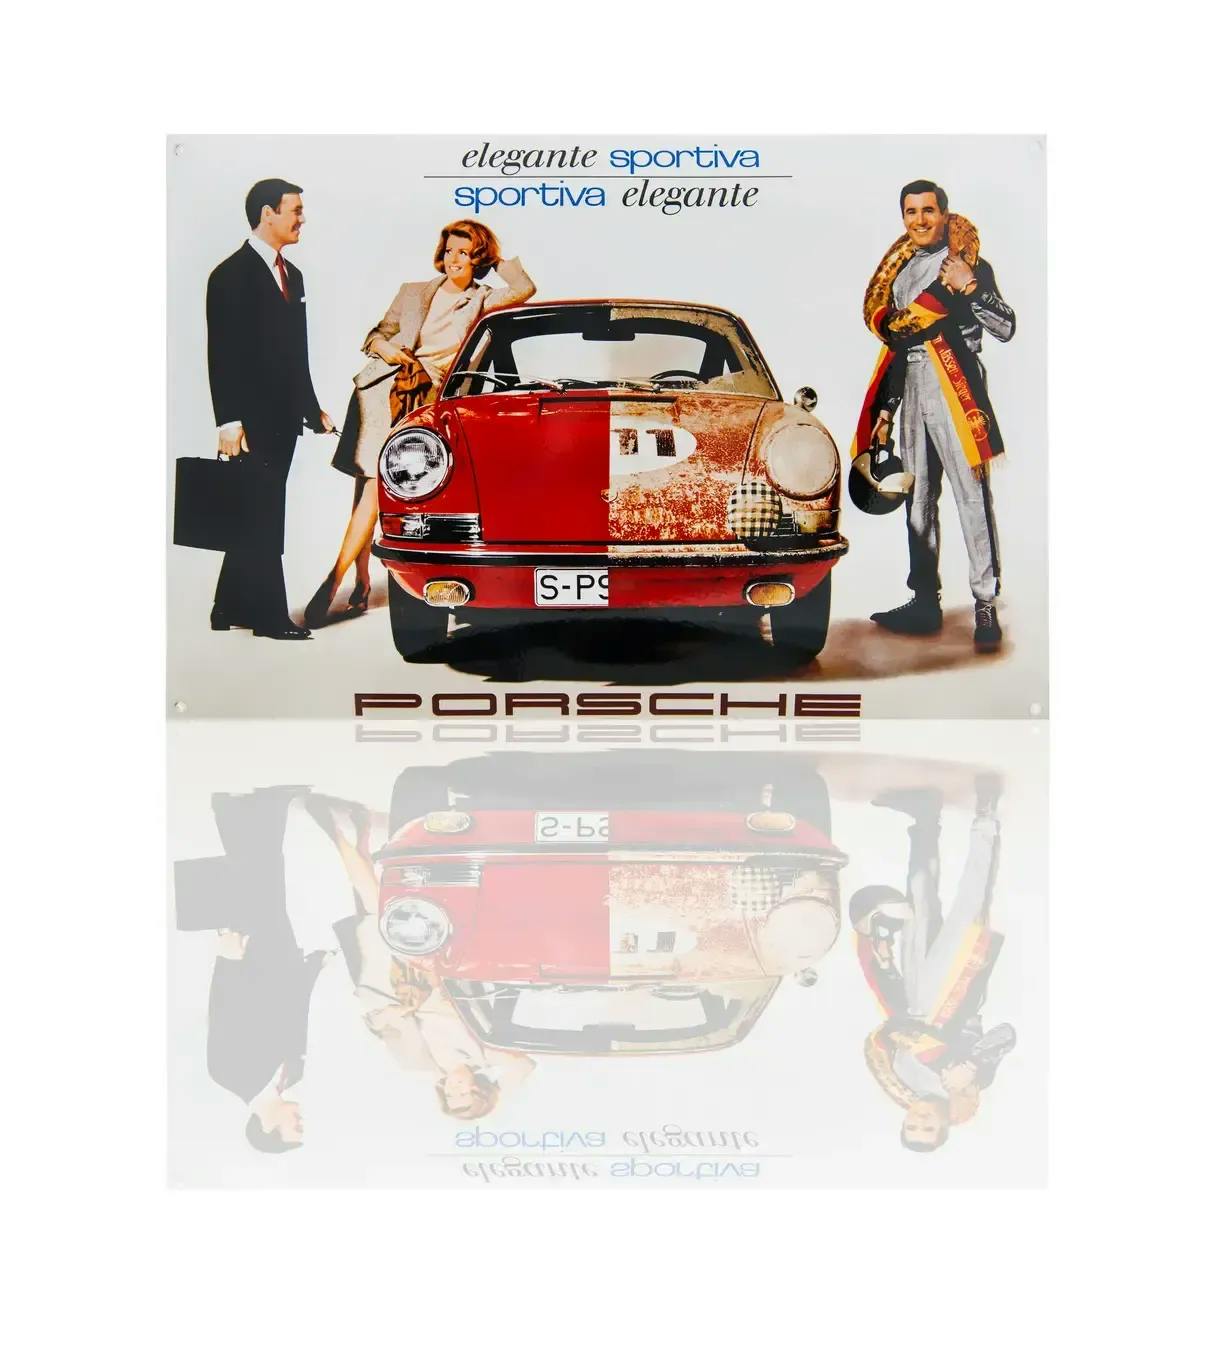 Placa esmaltada Porsche Classic: «Elegante sportiva» (Elegancia deportiva). 1